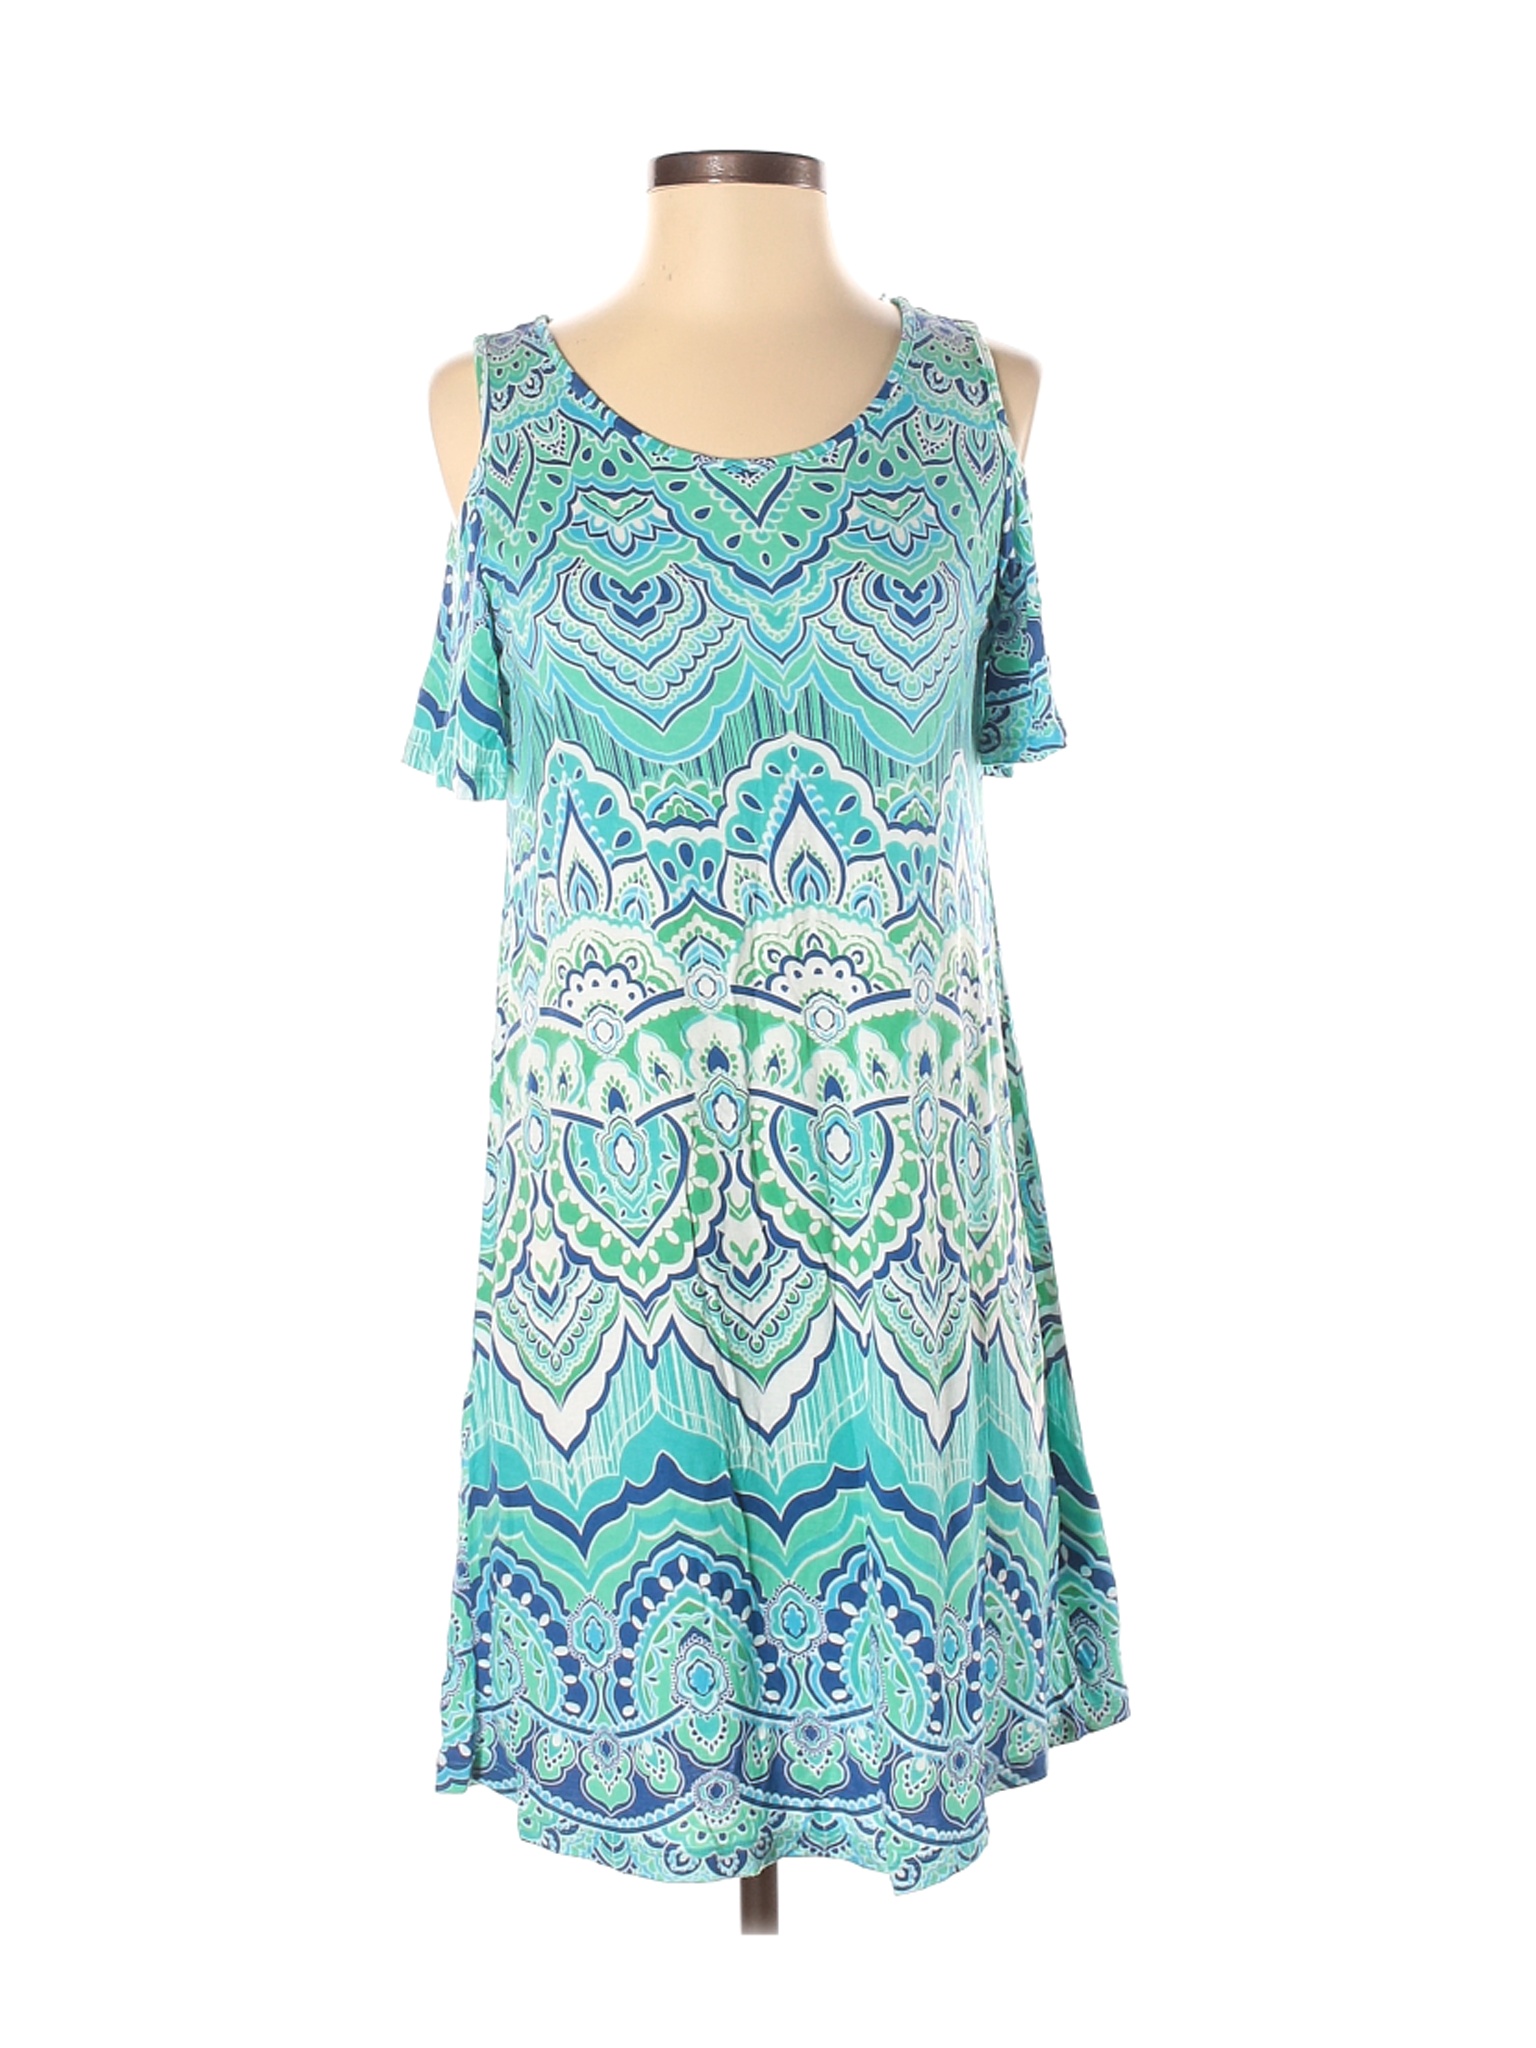 Santiki Women Blue Casual Dress S | eBay